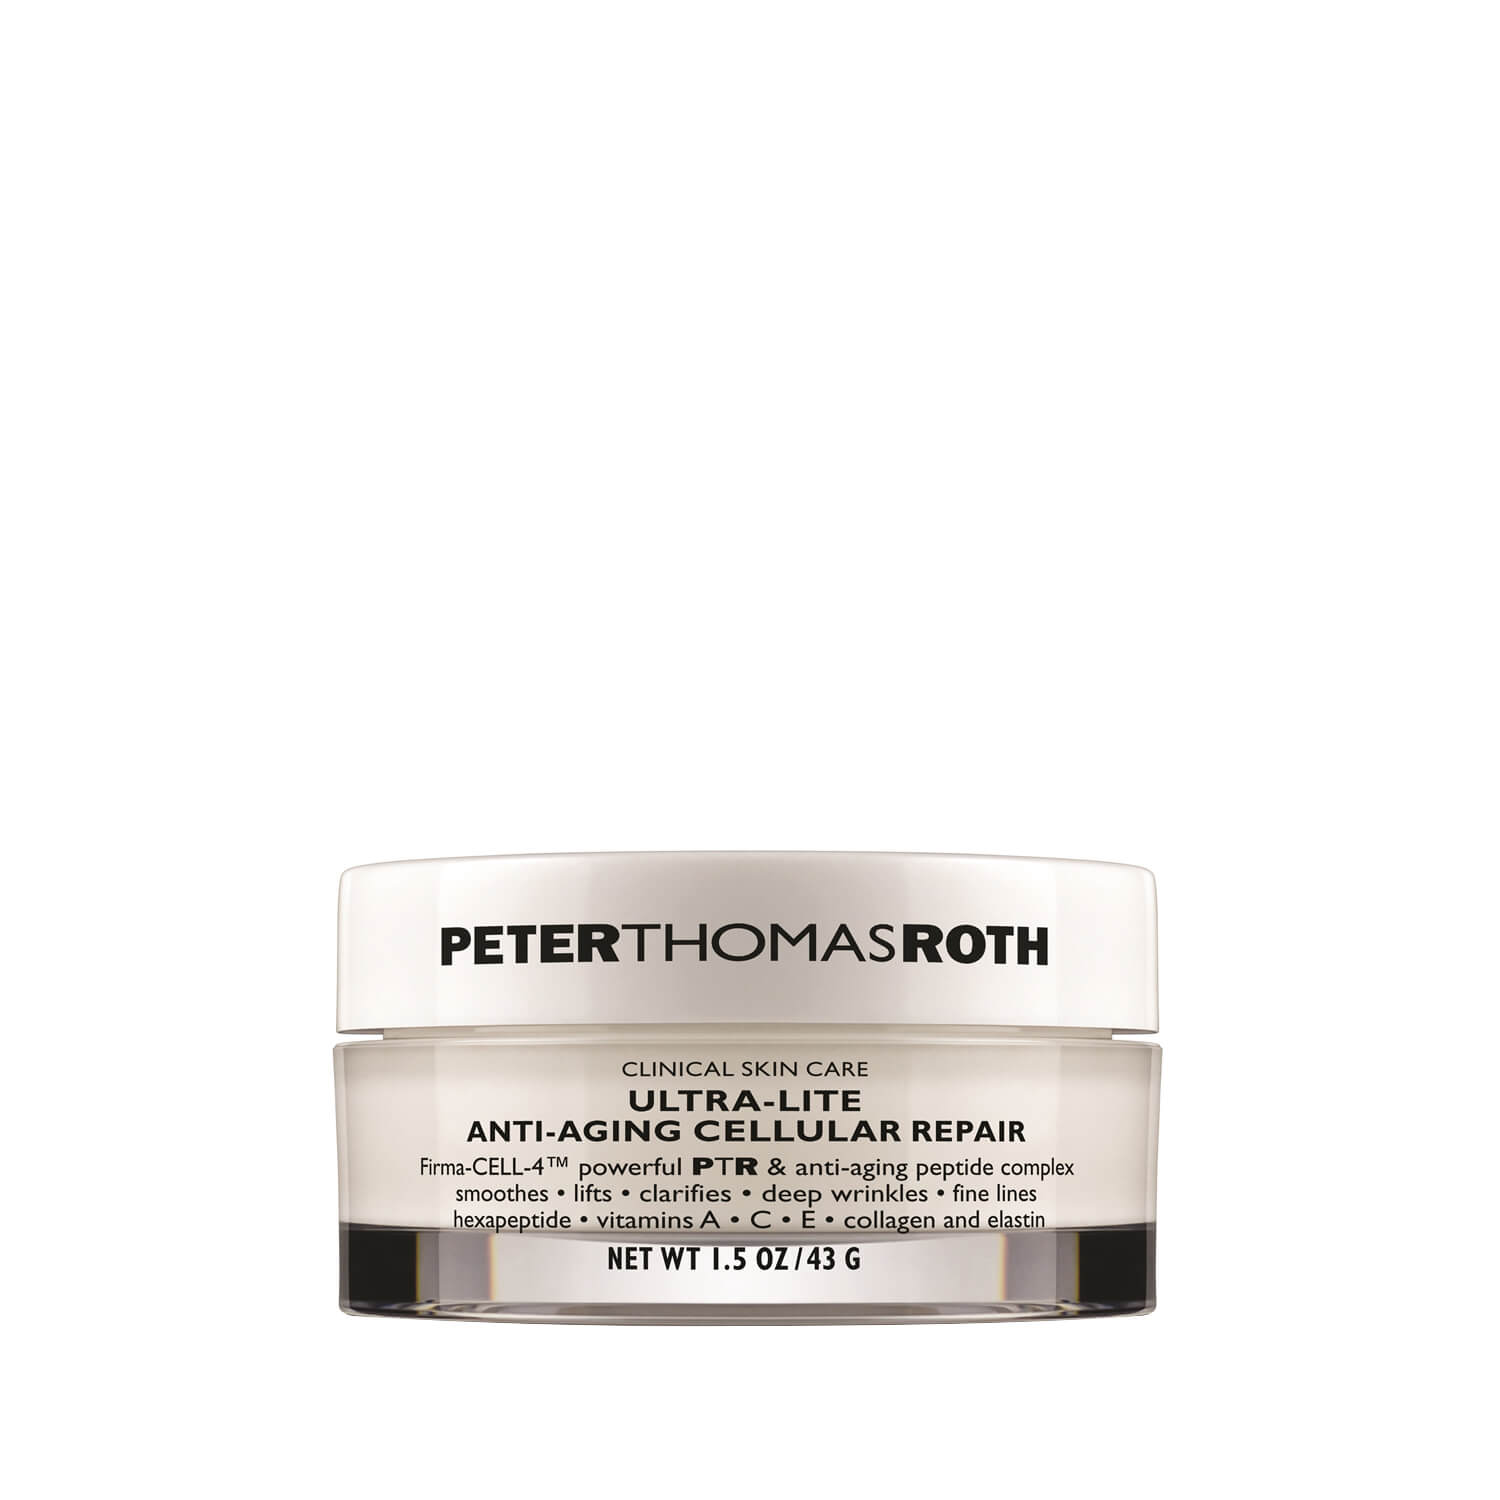 Crema anti-envejecimiento de reparacion celular ultra-lite de Peter Thomas Roth (43 g)